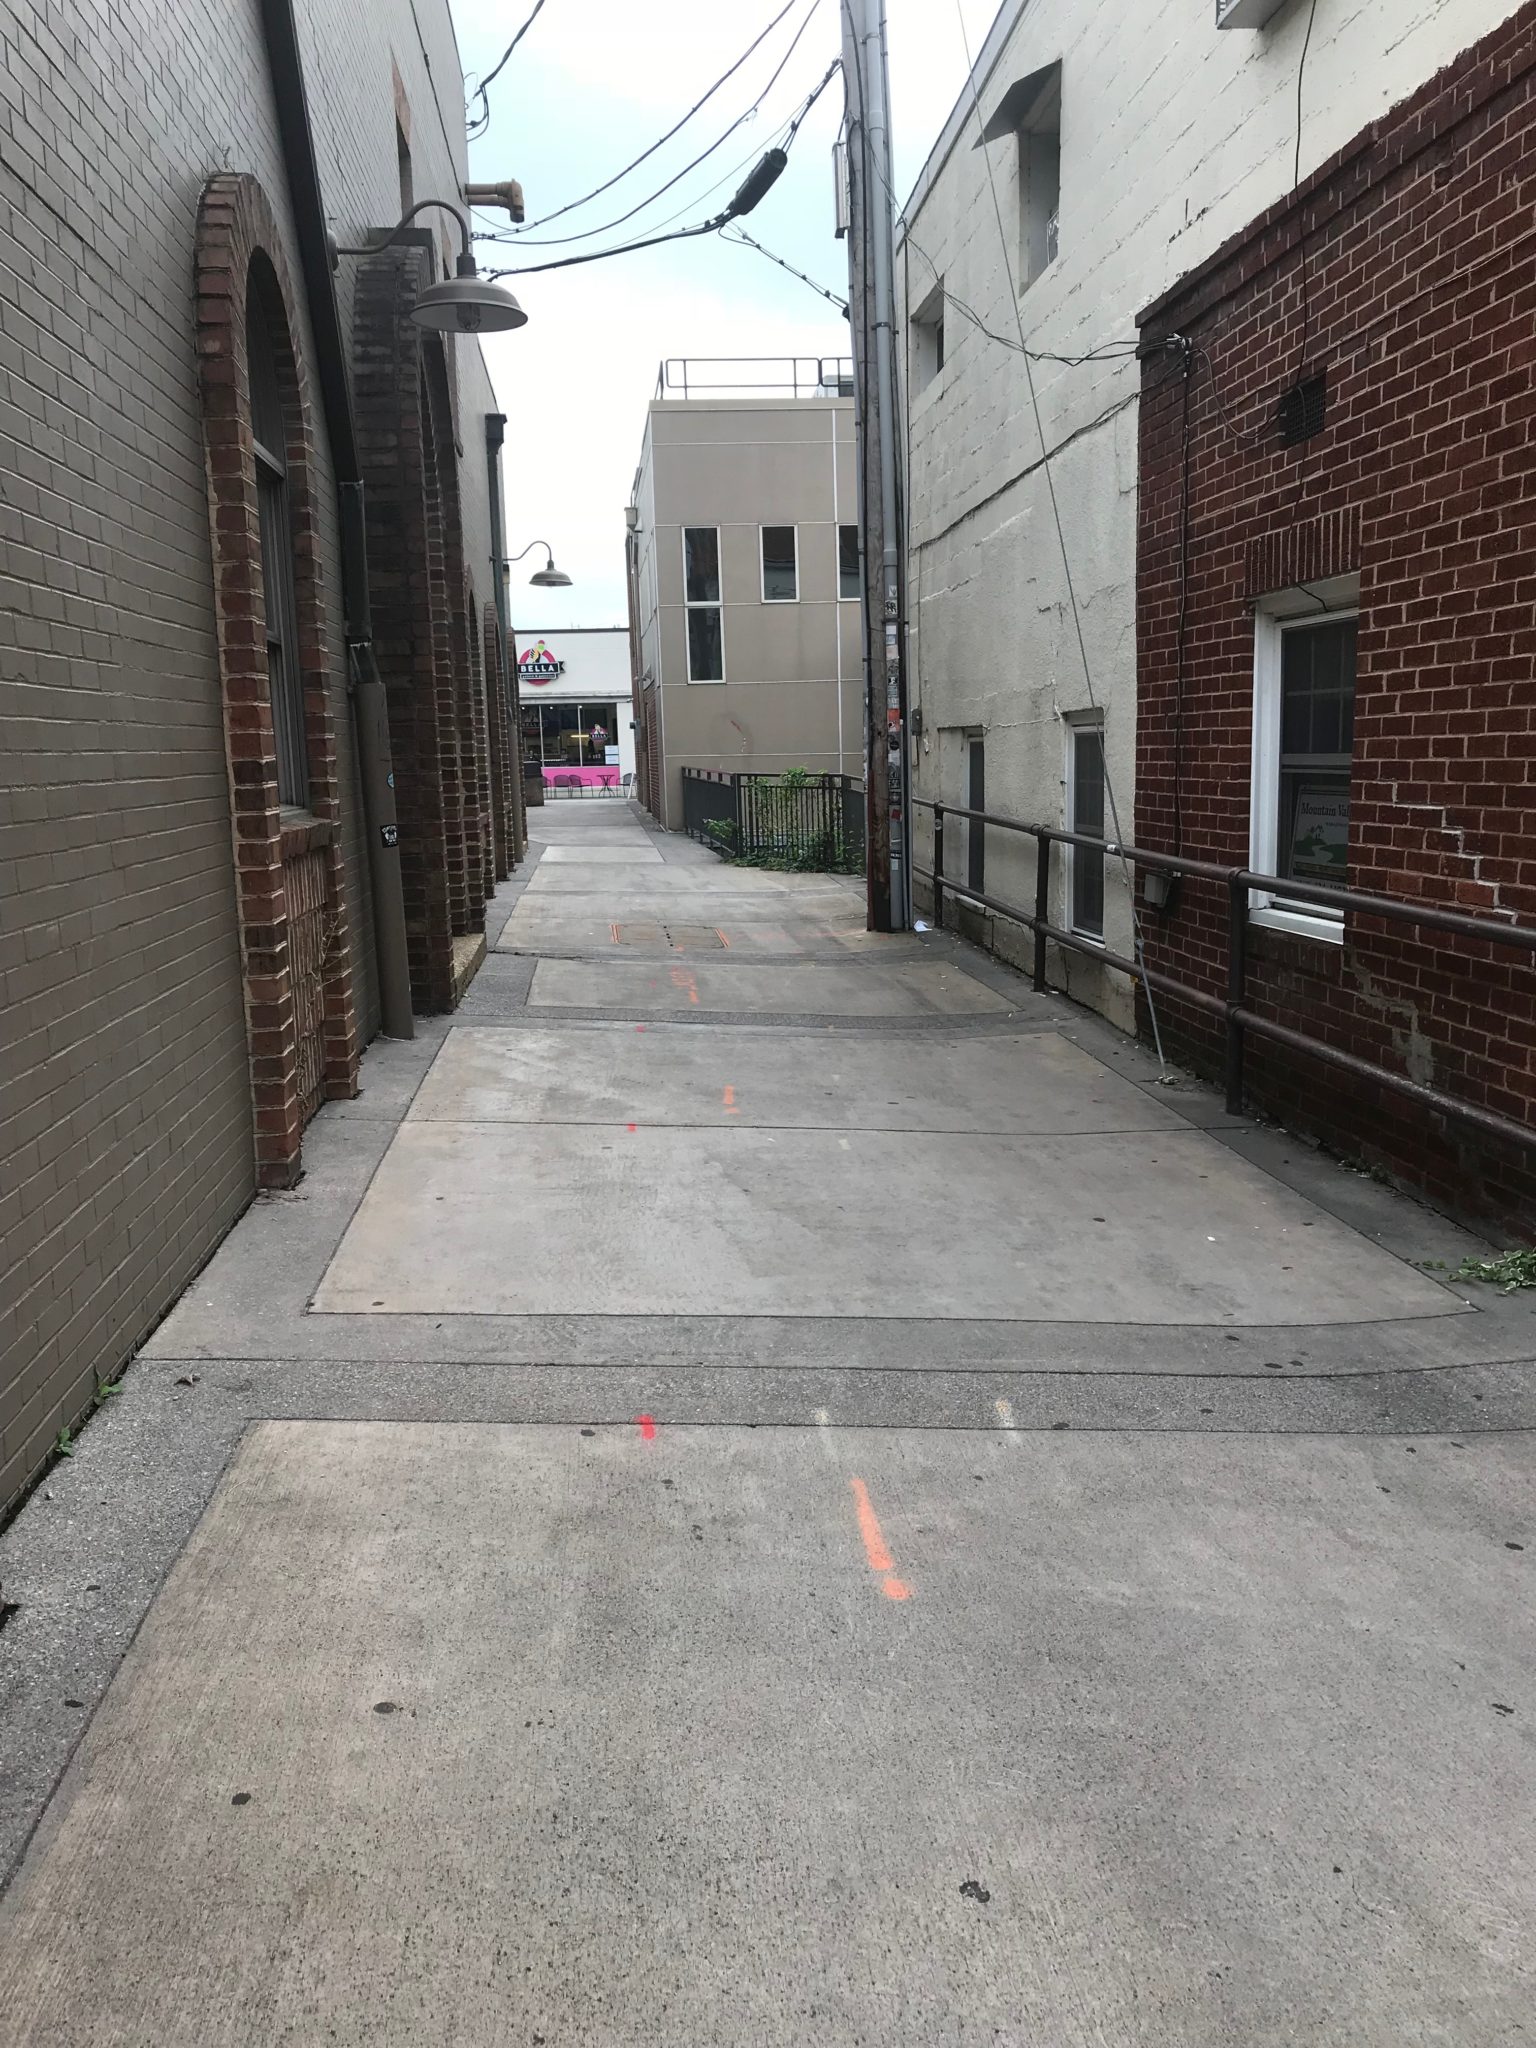 Alleyway with brick walls in Downtown Harrisonburg